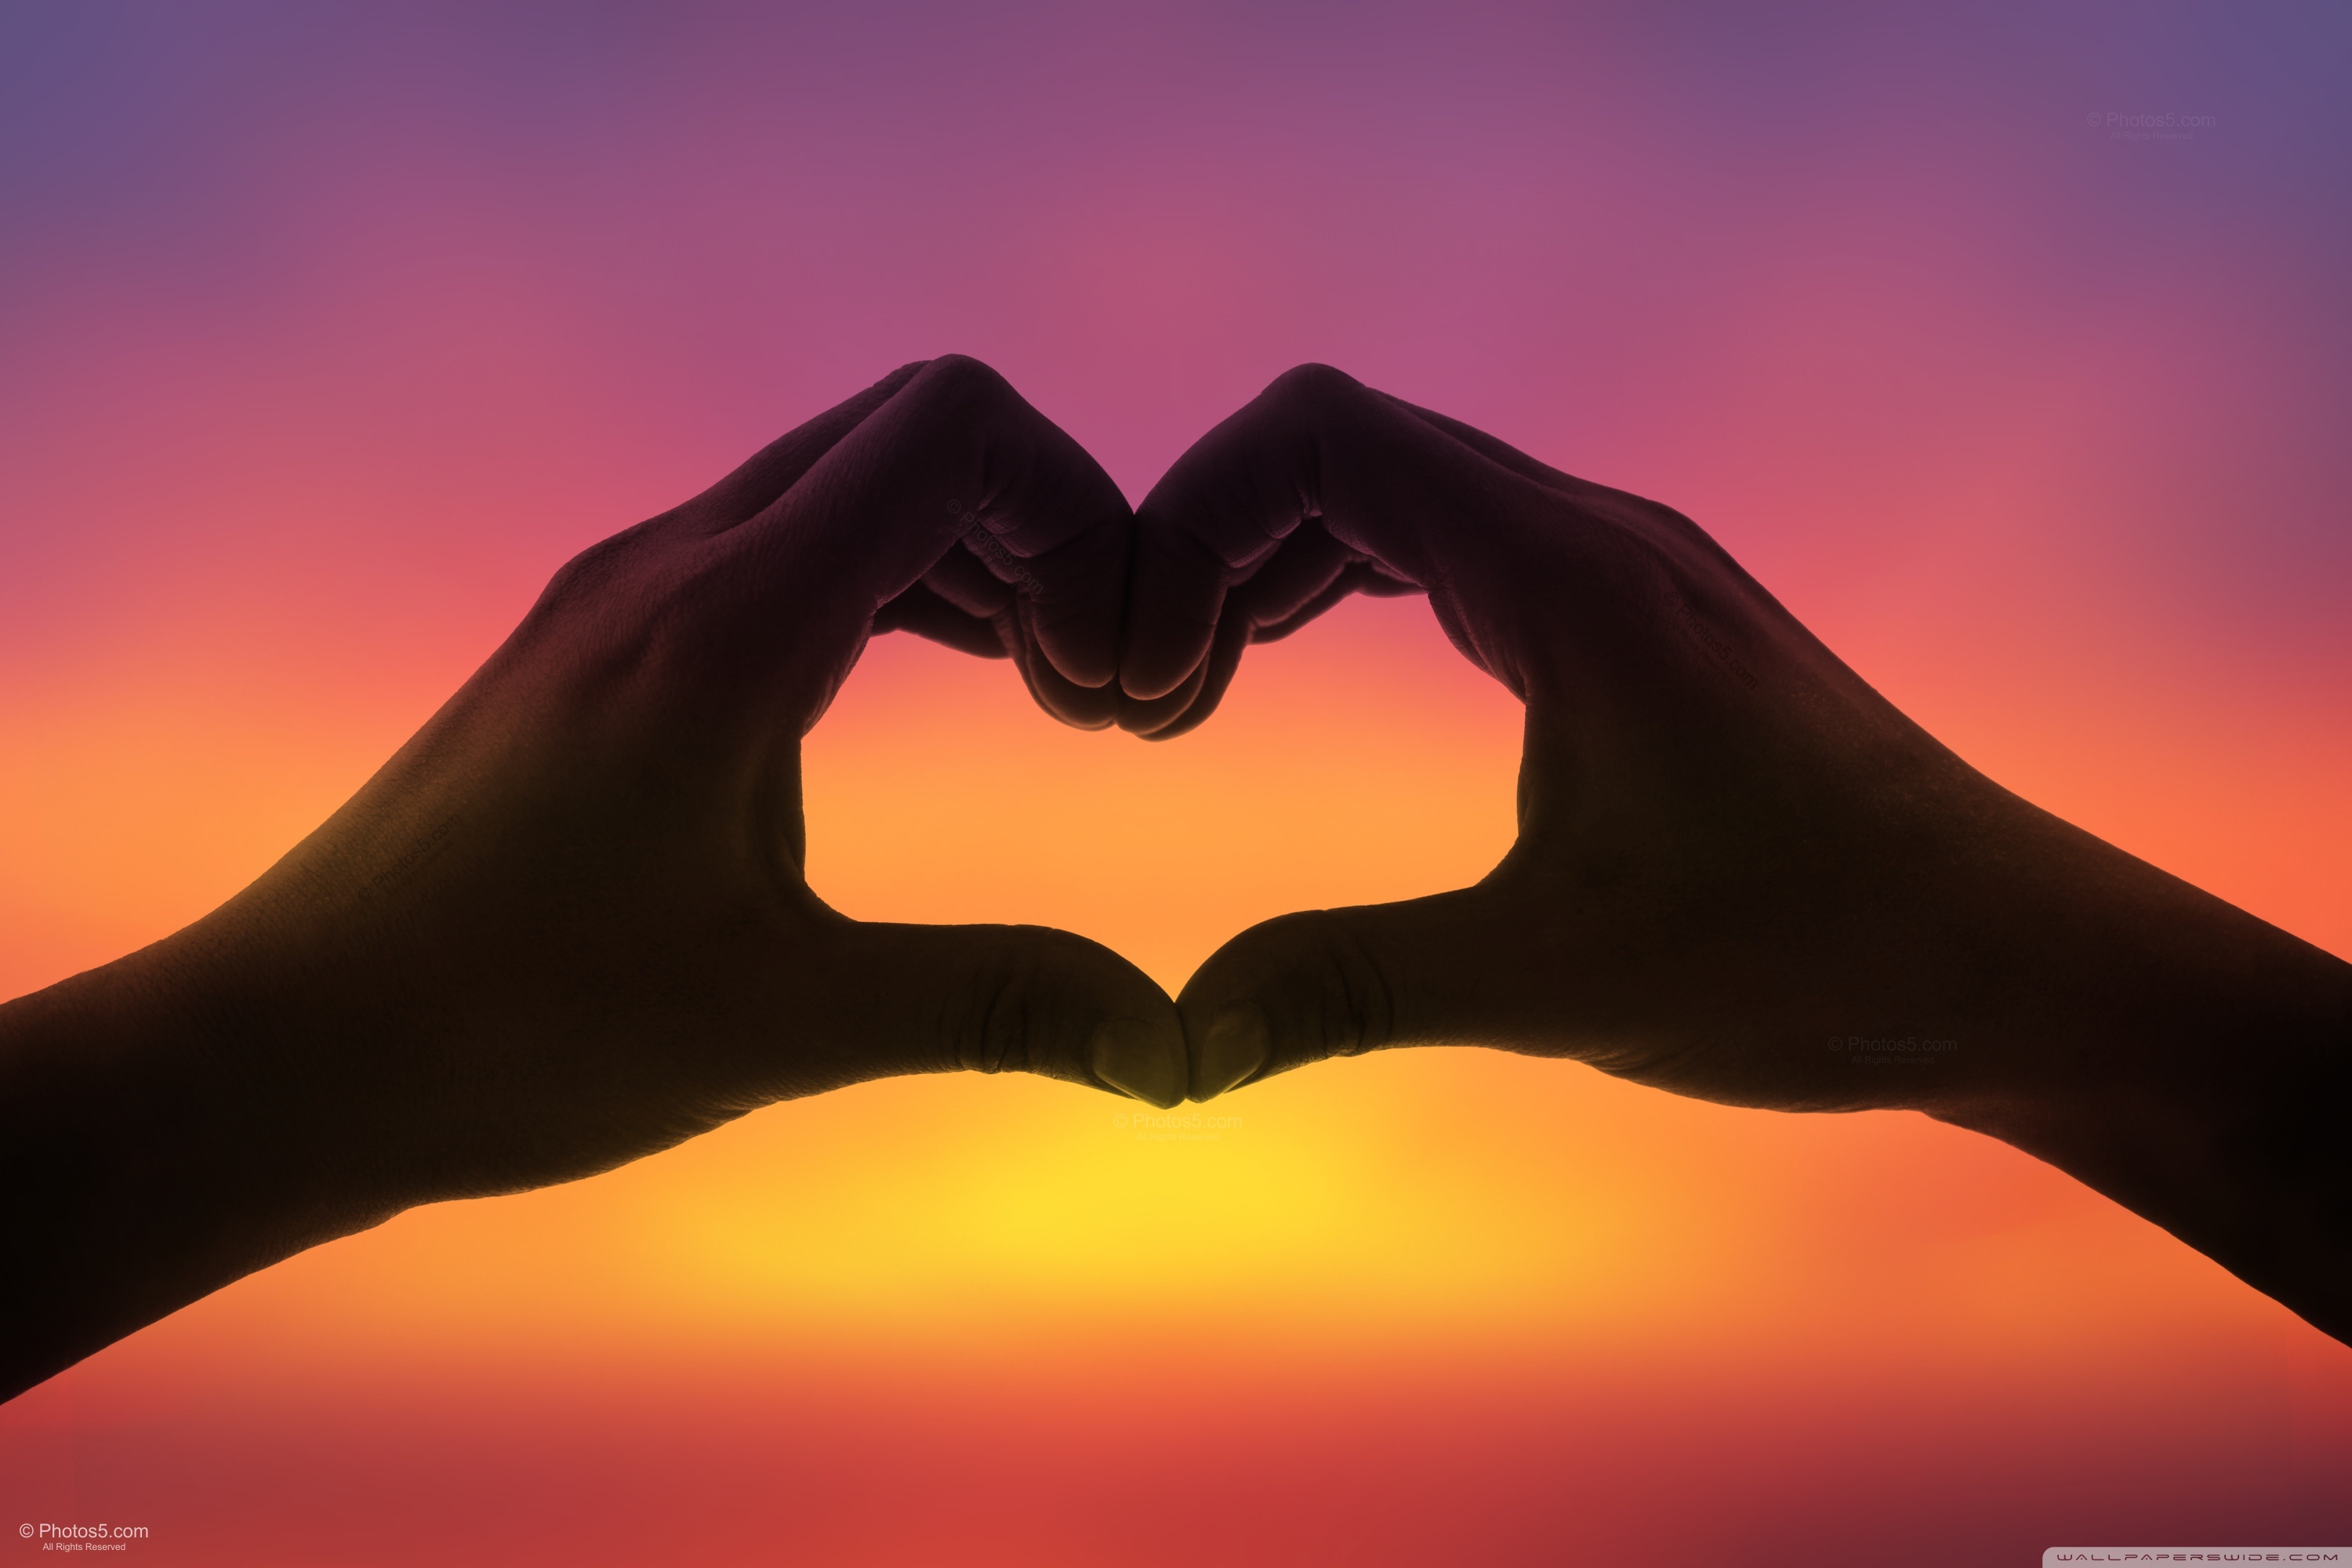 Hands Love Heart at Sunset Ultra HD Desktop Background Wallpaper for 4K UHD TV, Tablet